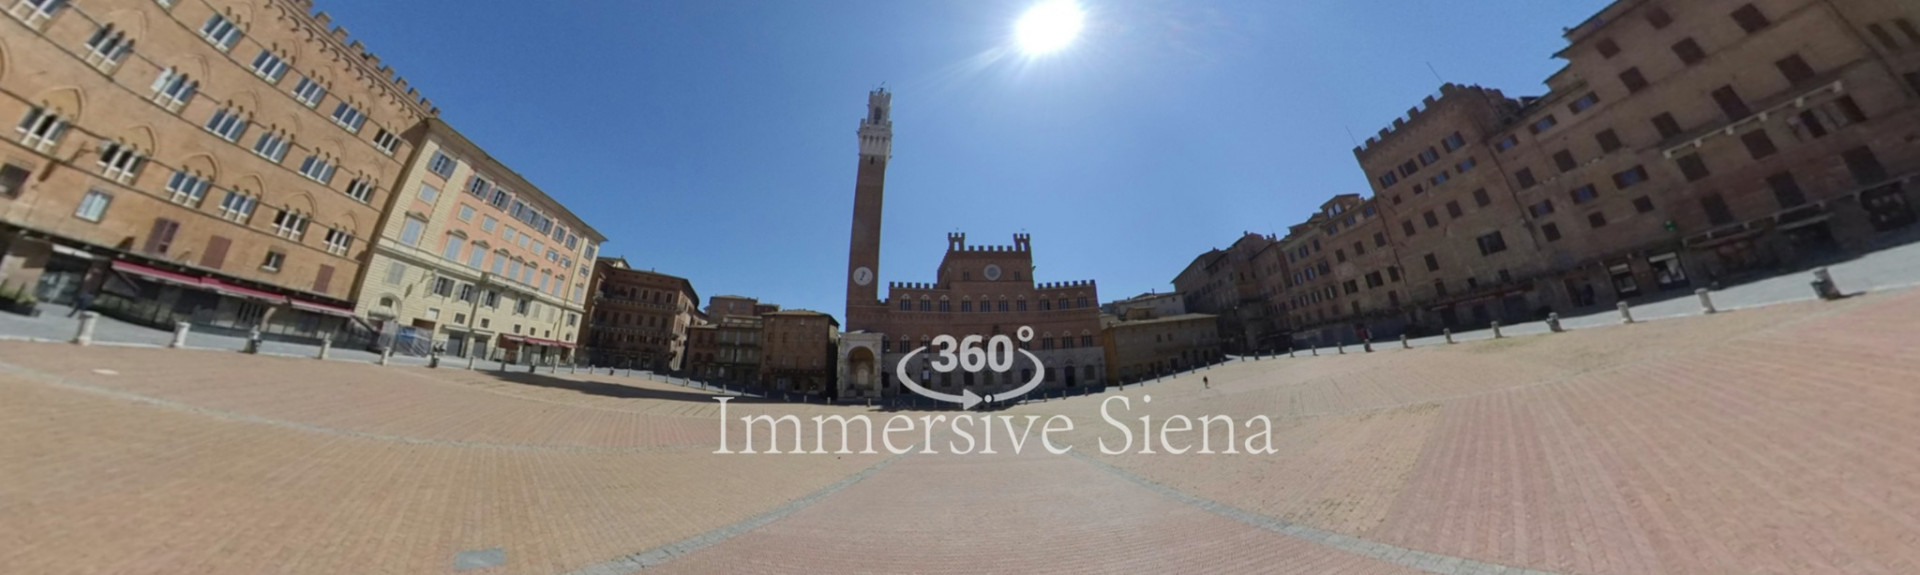 Immersive Siena